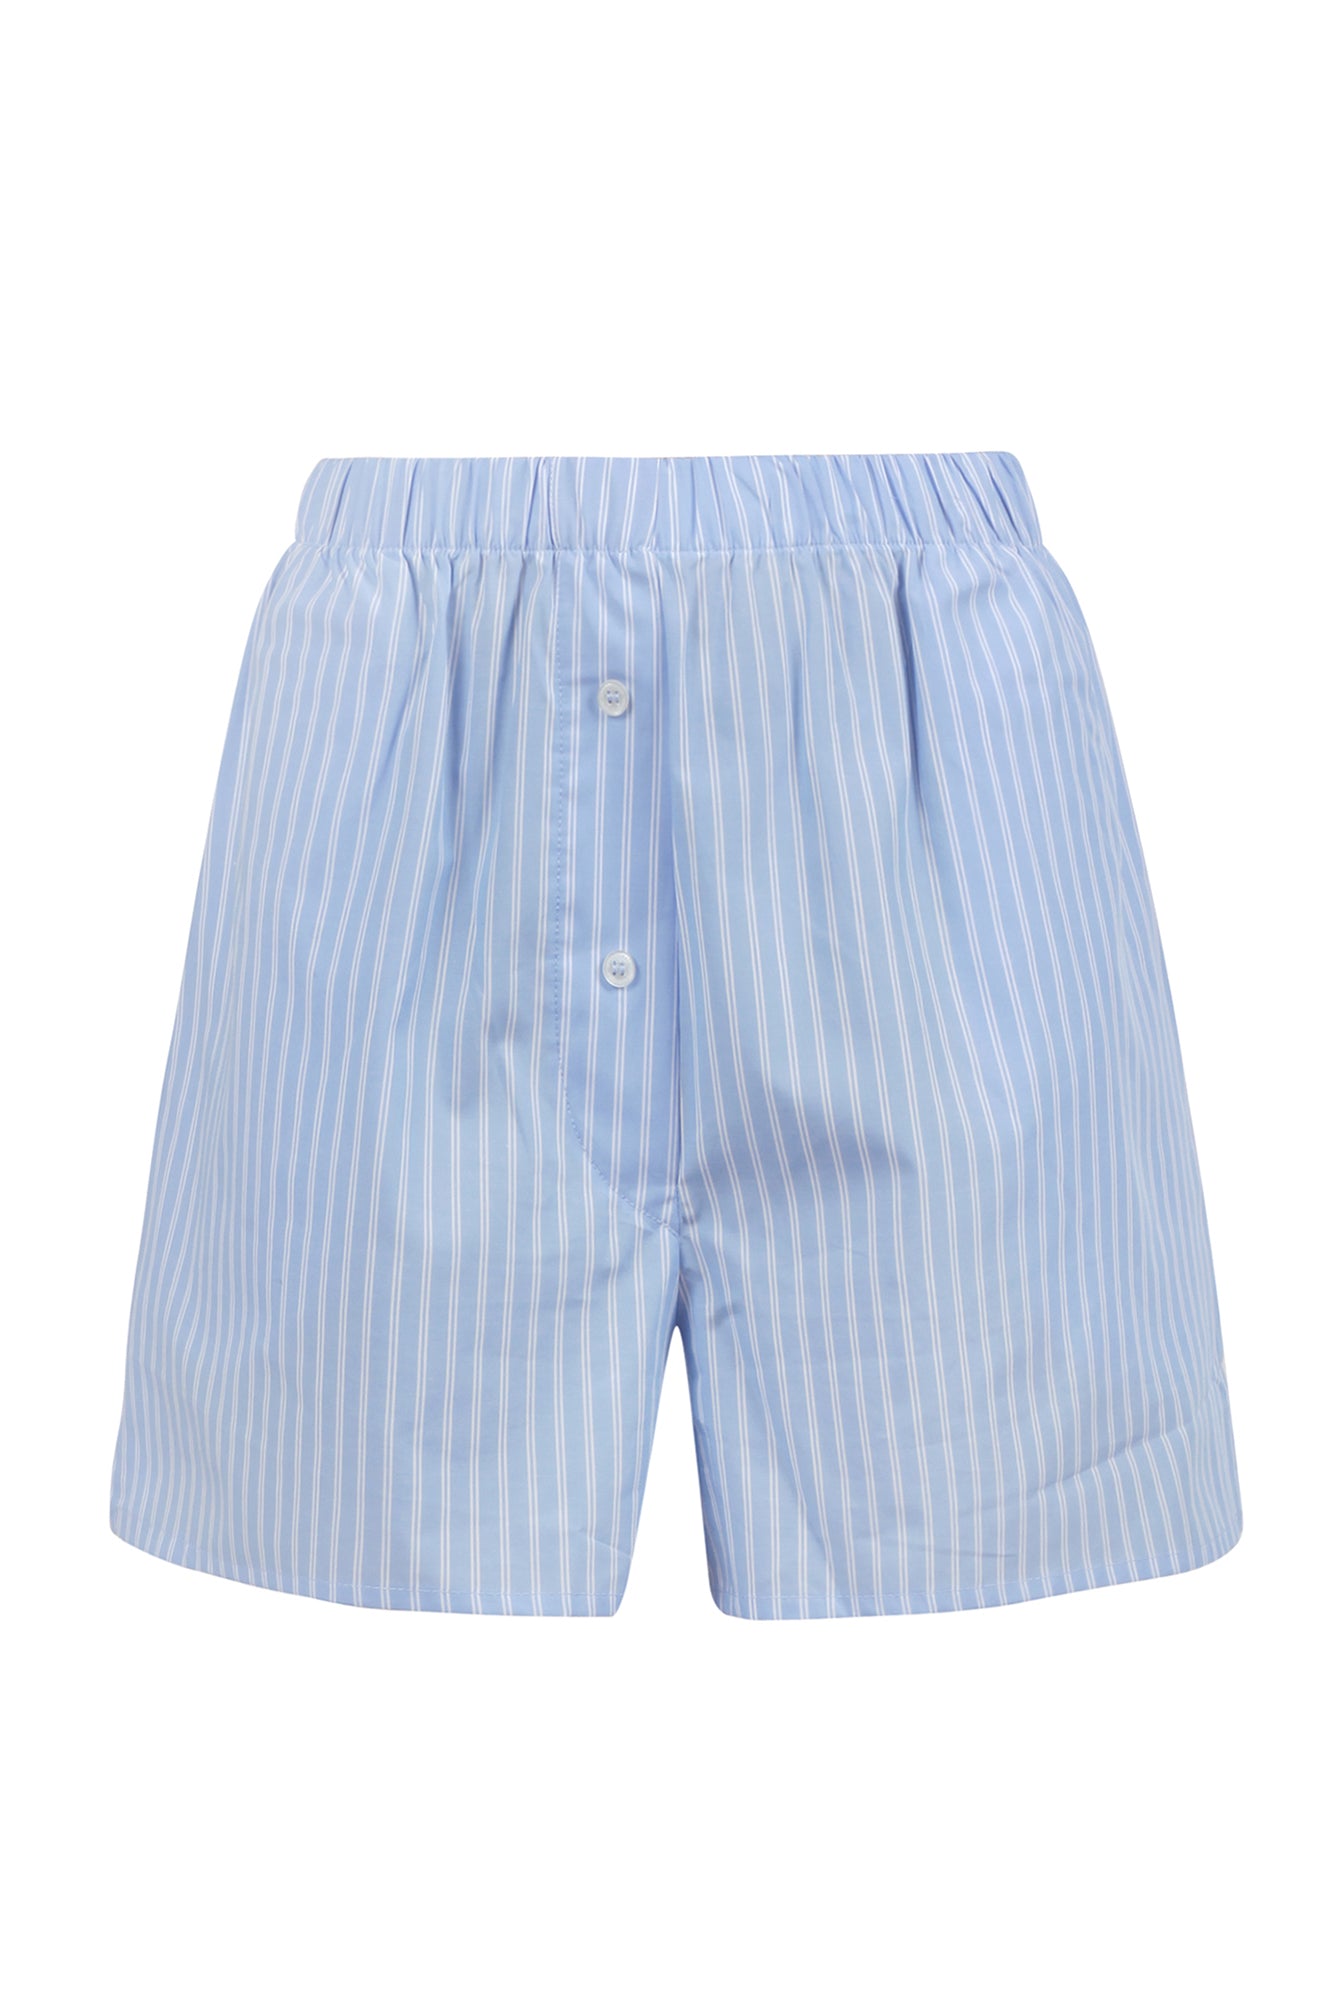 Hinnominate - Shorts - 430100 - Azzurro